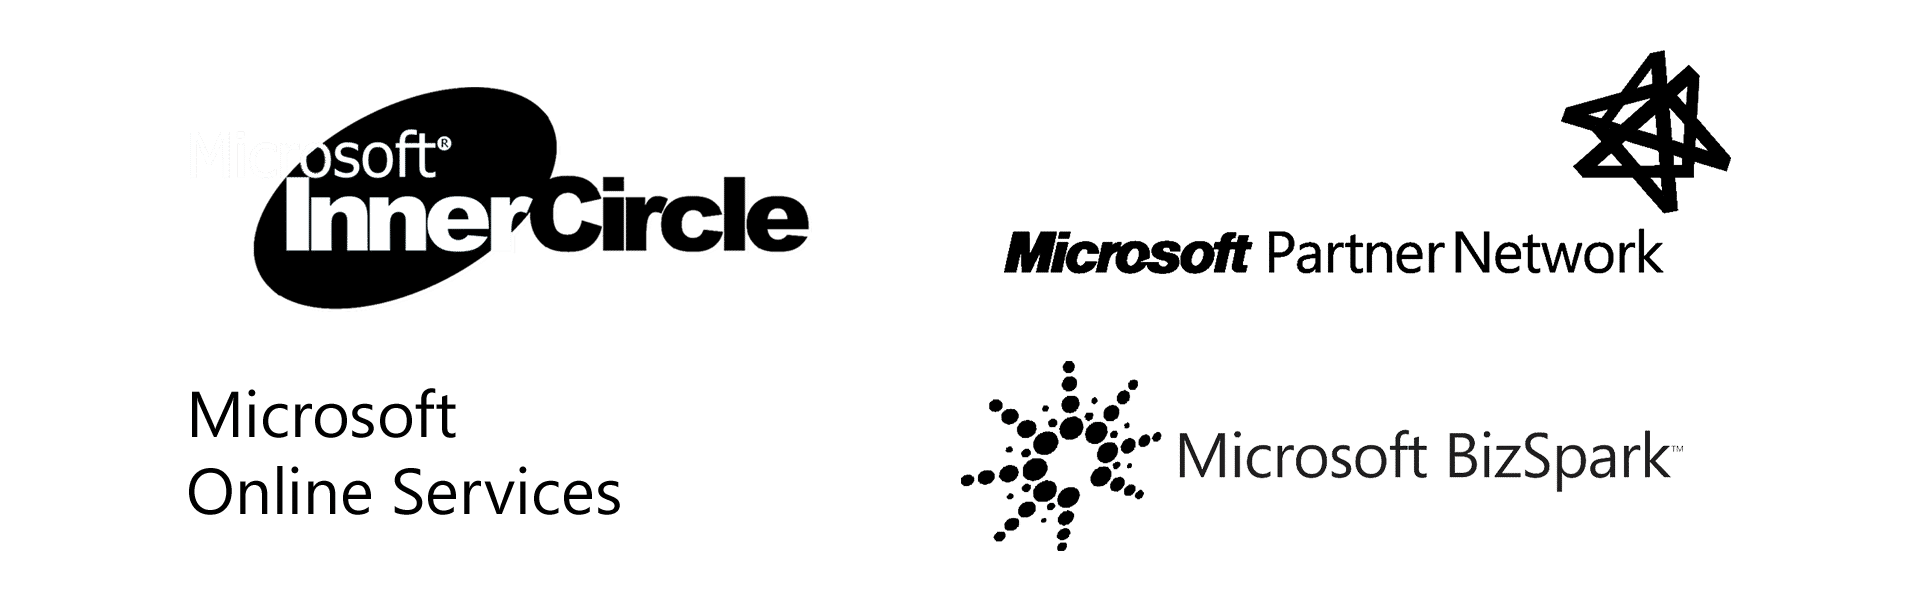 messageconcept microsoft partner